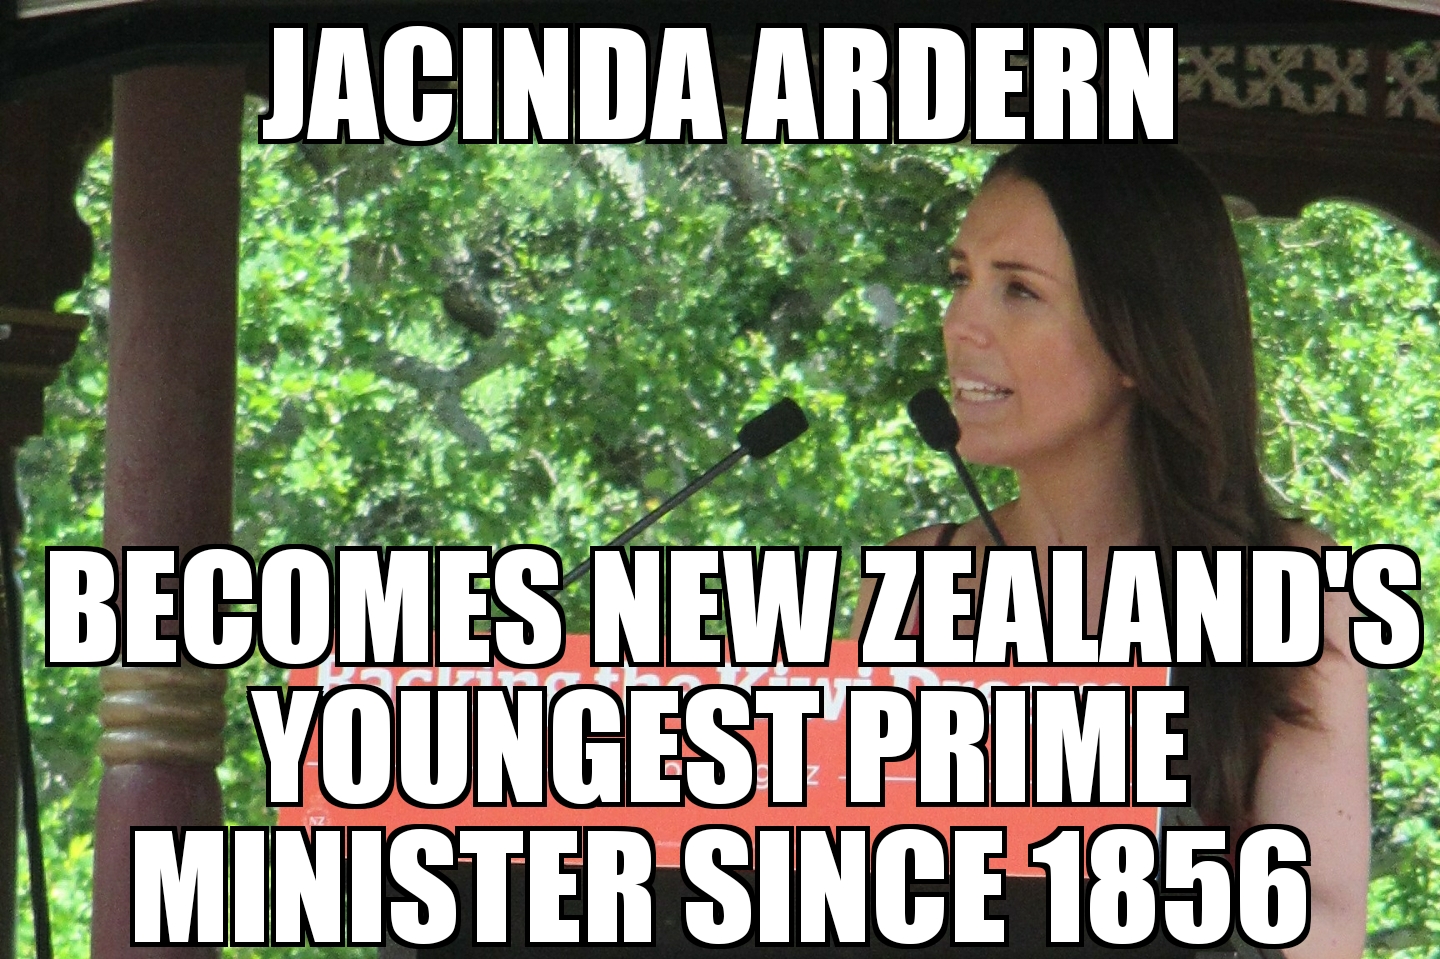 Jacinda Ardern becomes New Zealand P.M.